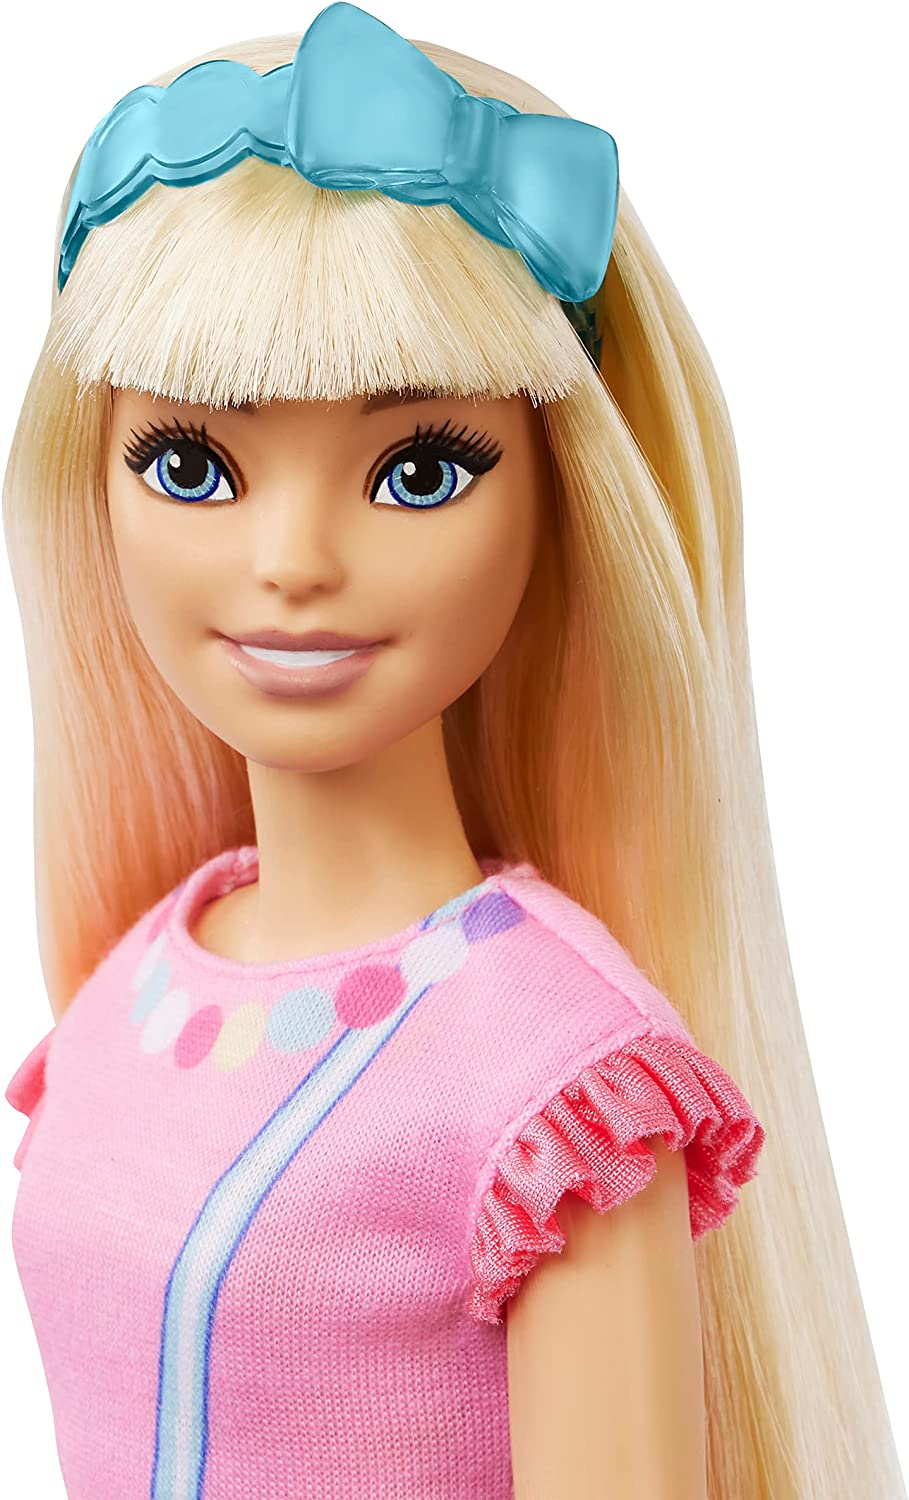 My First Barbie dolls 2023 - YouLoveIt.com